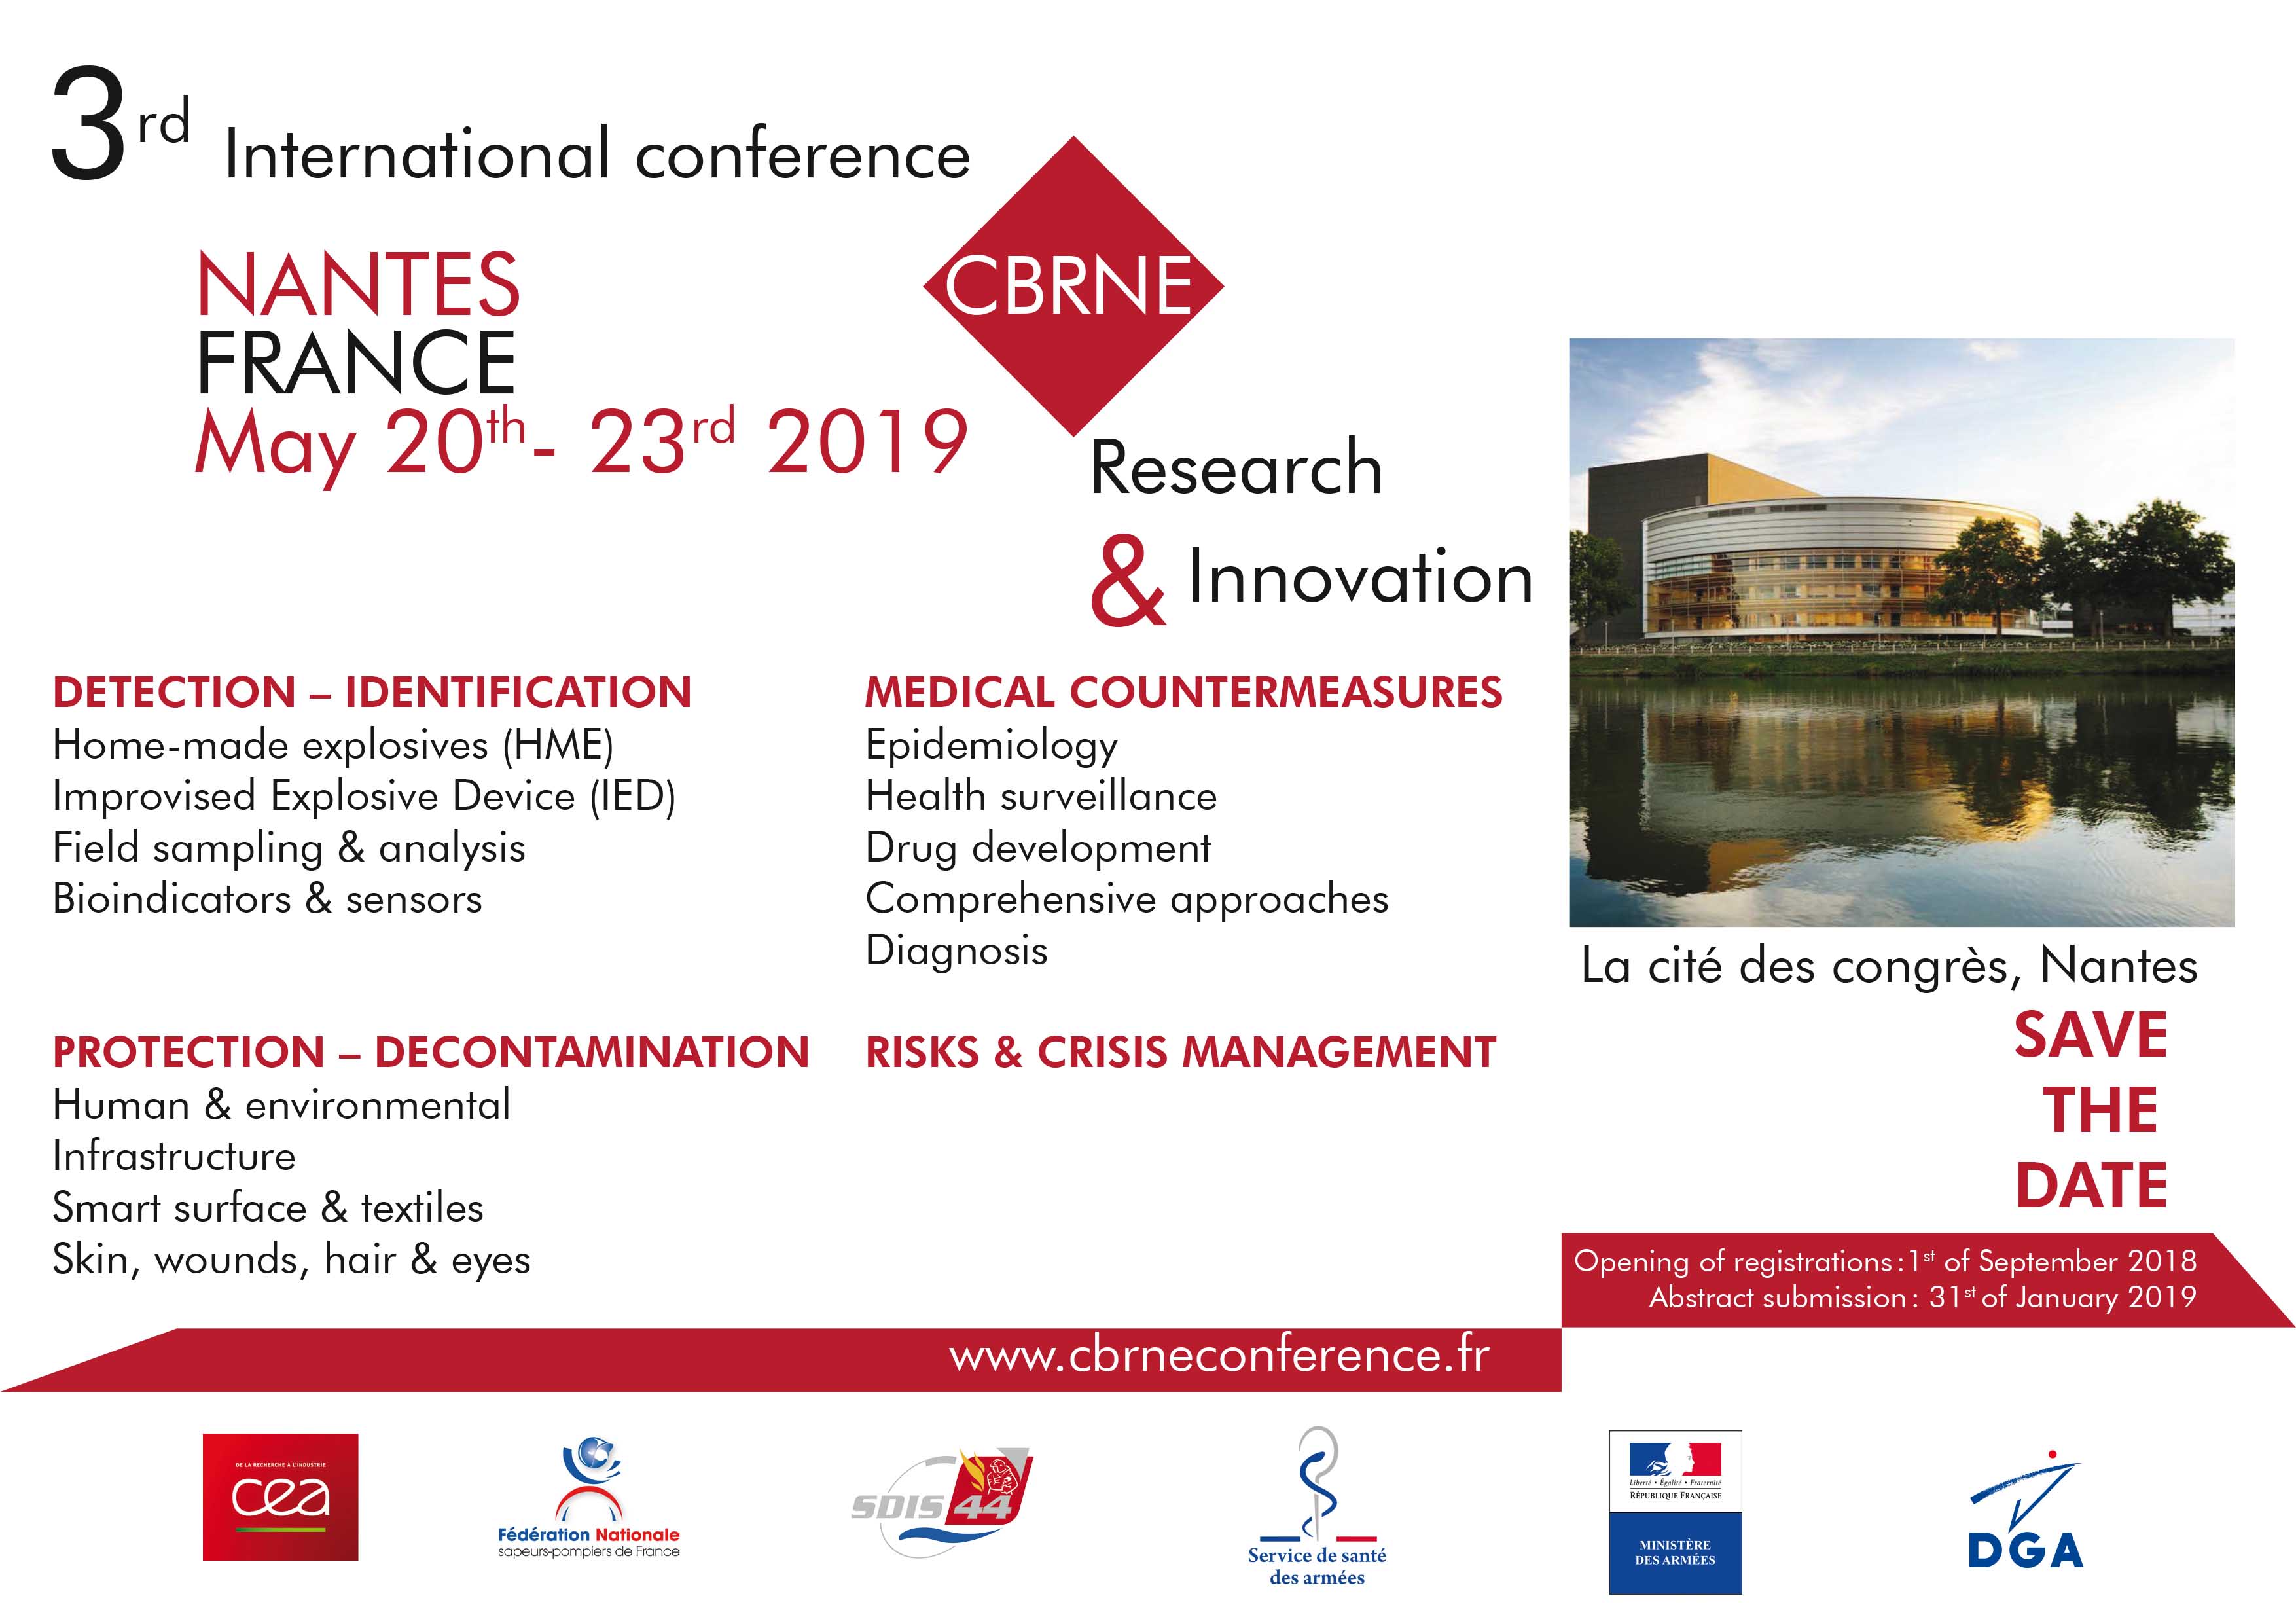 3rd International Conference CBRNE